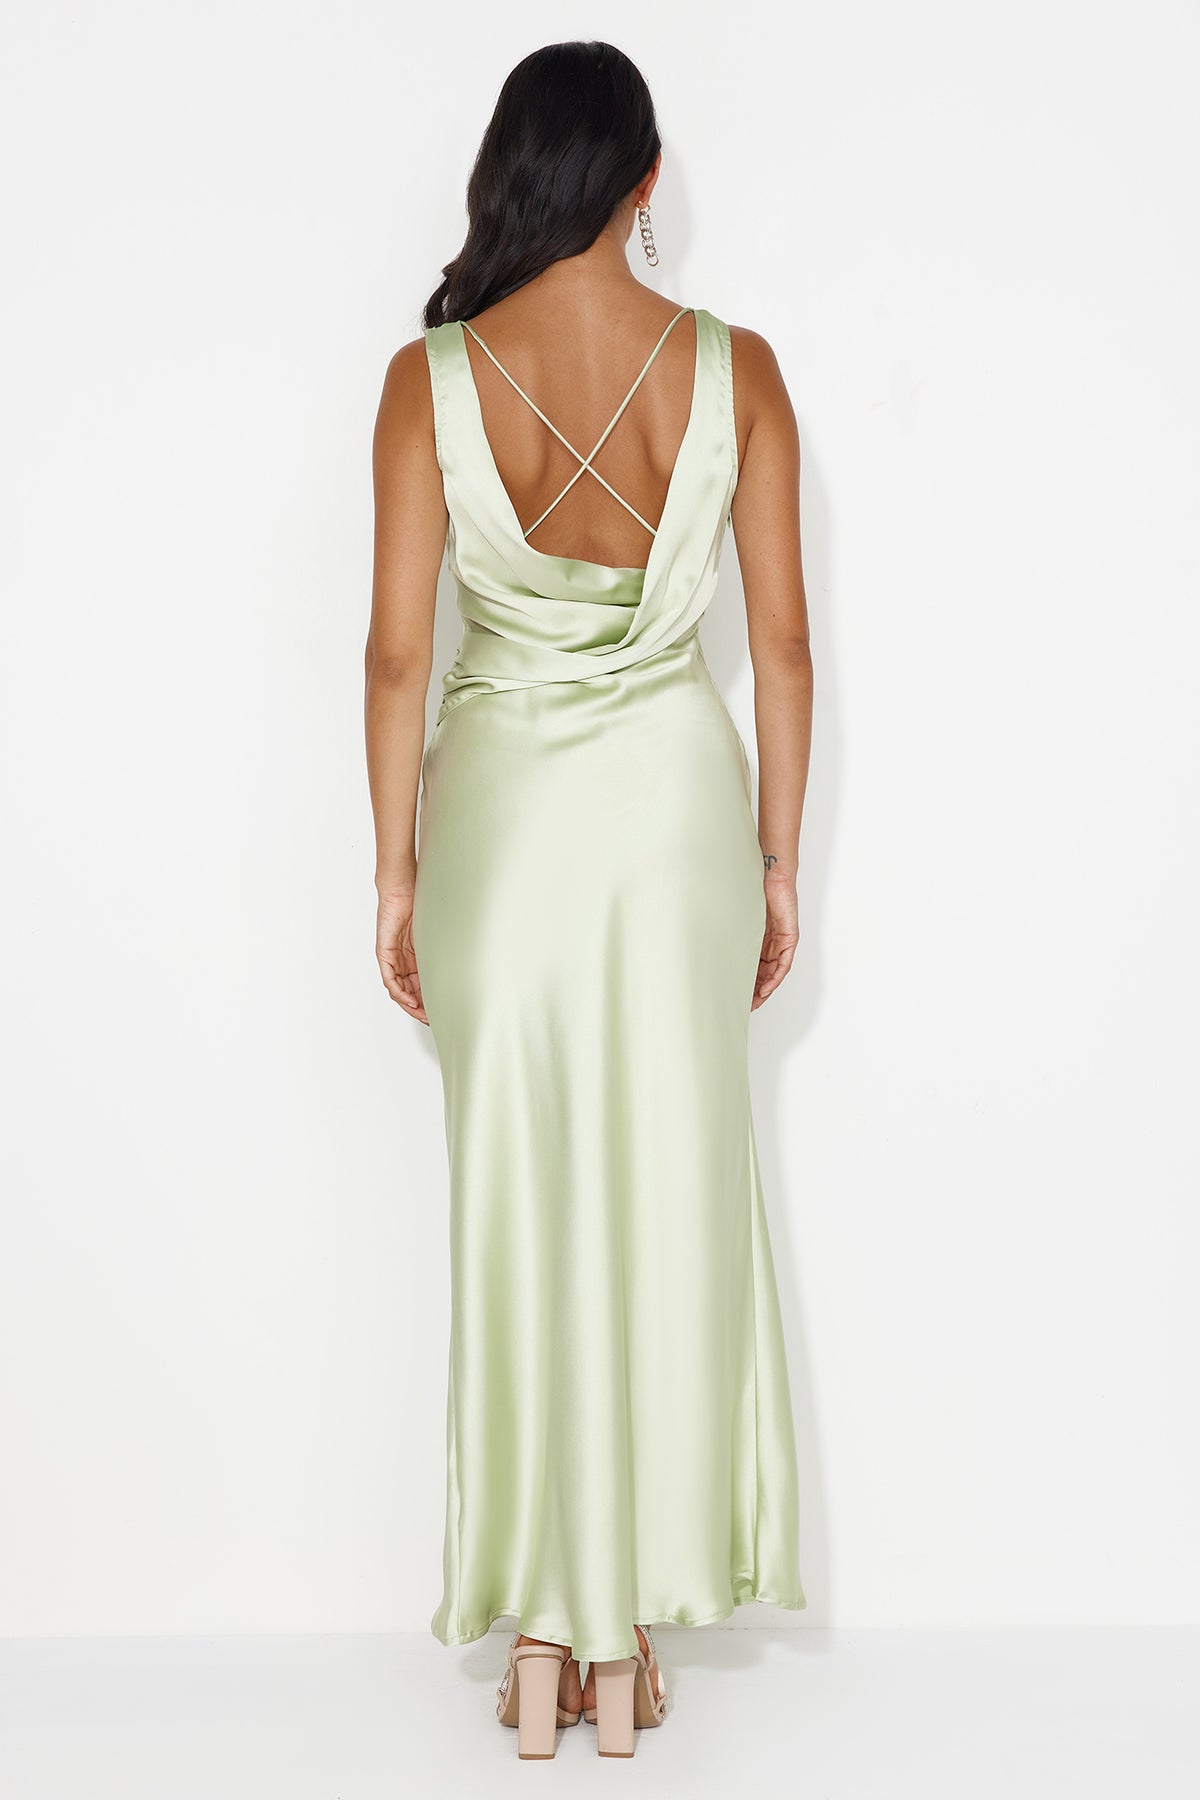 Shop Formal Dress - Indigo Fields Satin Maxi Dress Green fourth image